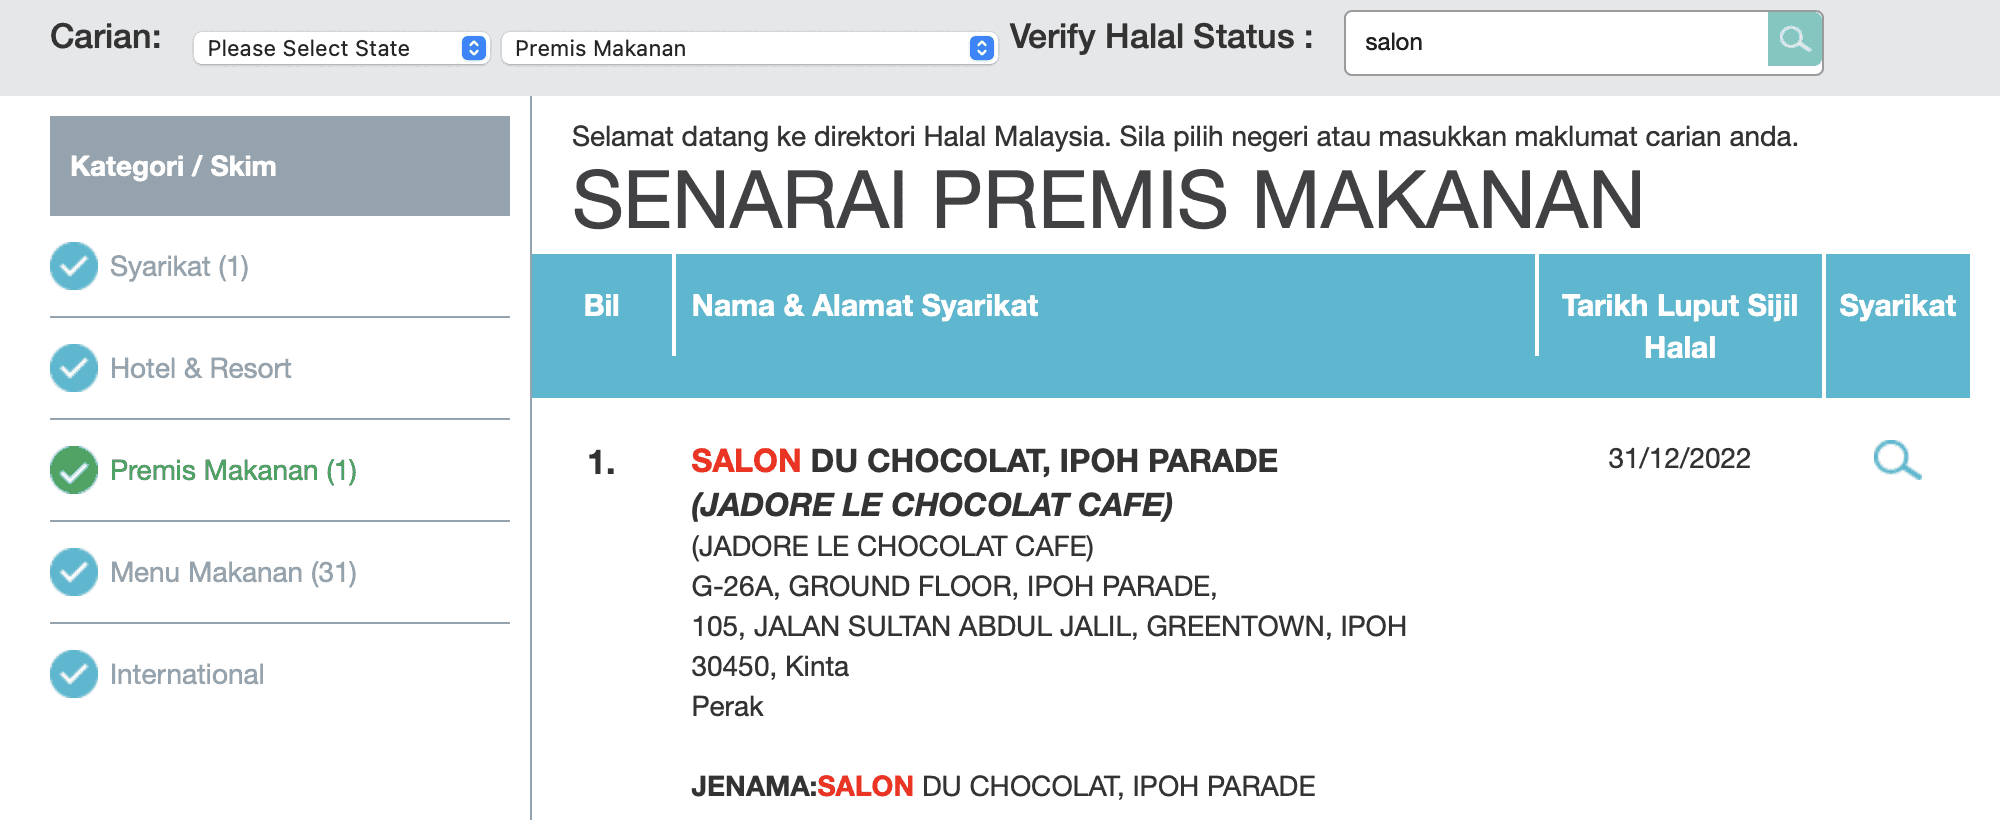 Is Salon Du Chocolat Halal?